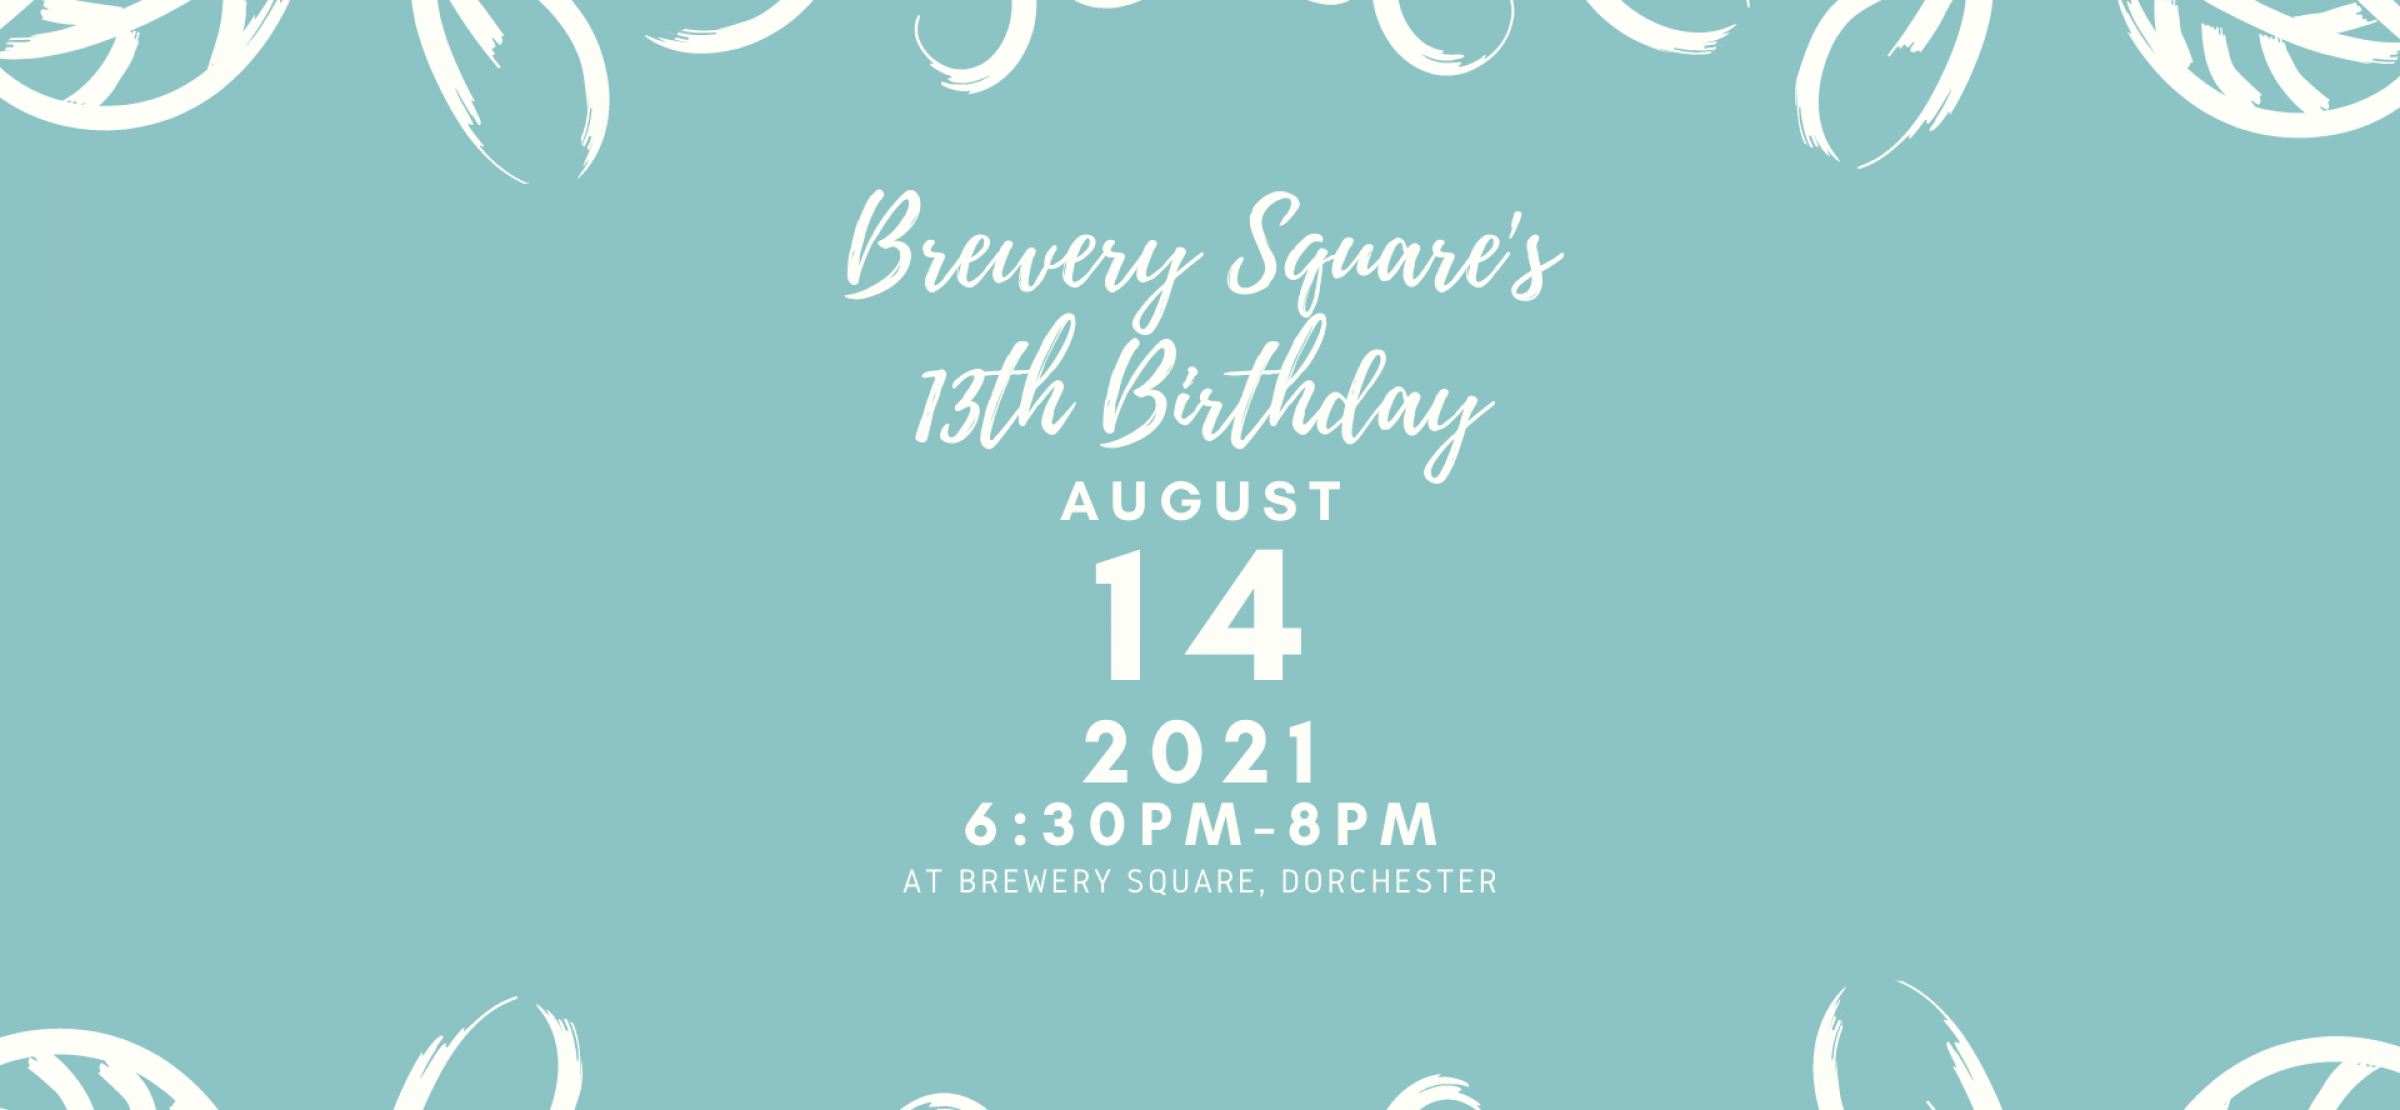 New Brewery Square Birthday Event Invitation (1)